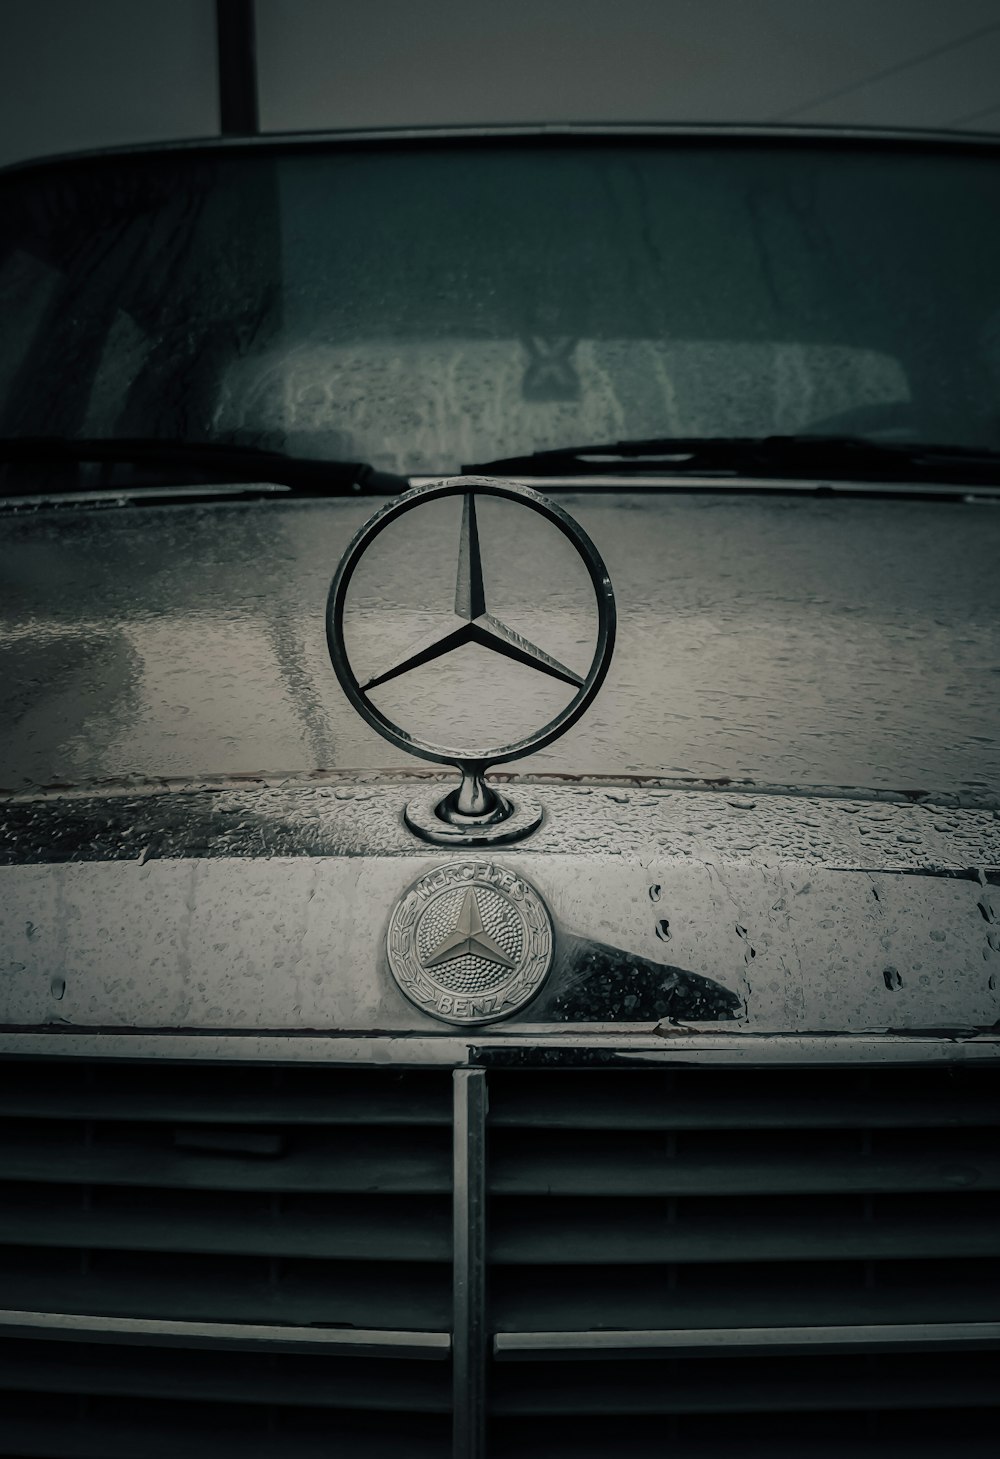 a mercedes emblem on the front of a car